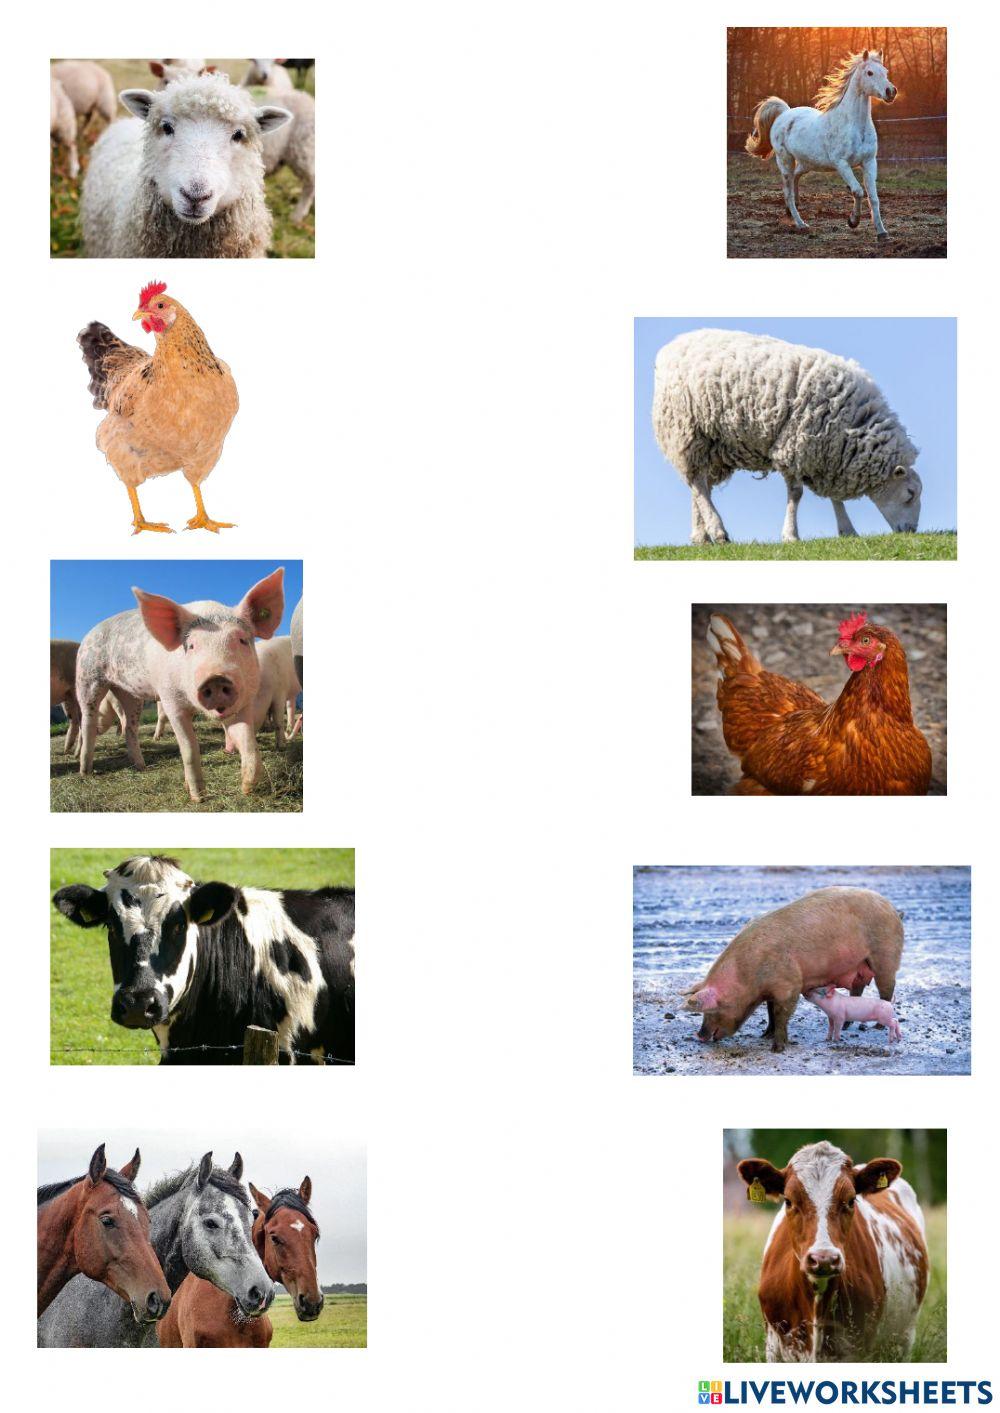 Animales granja